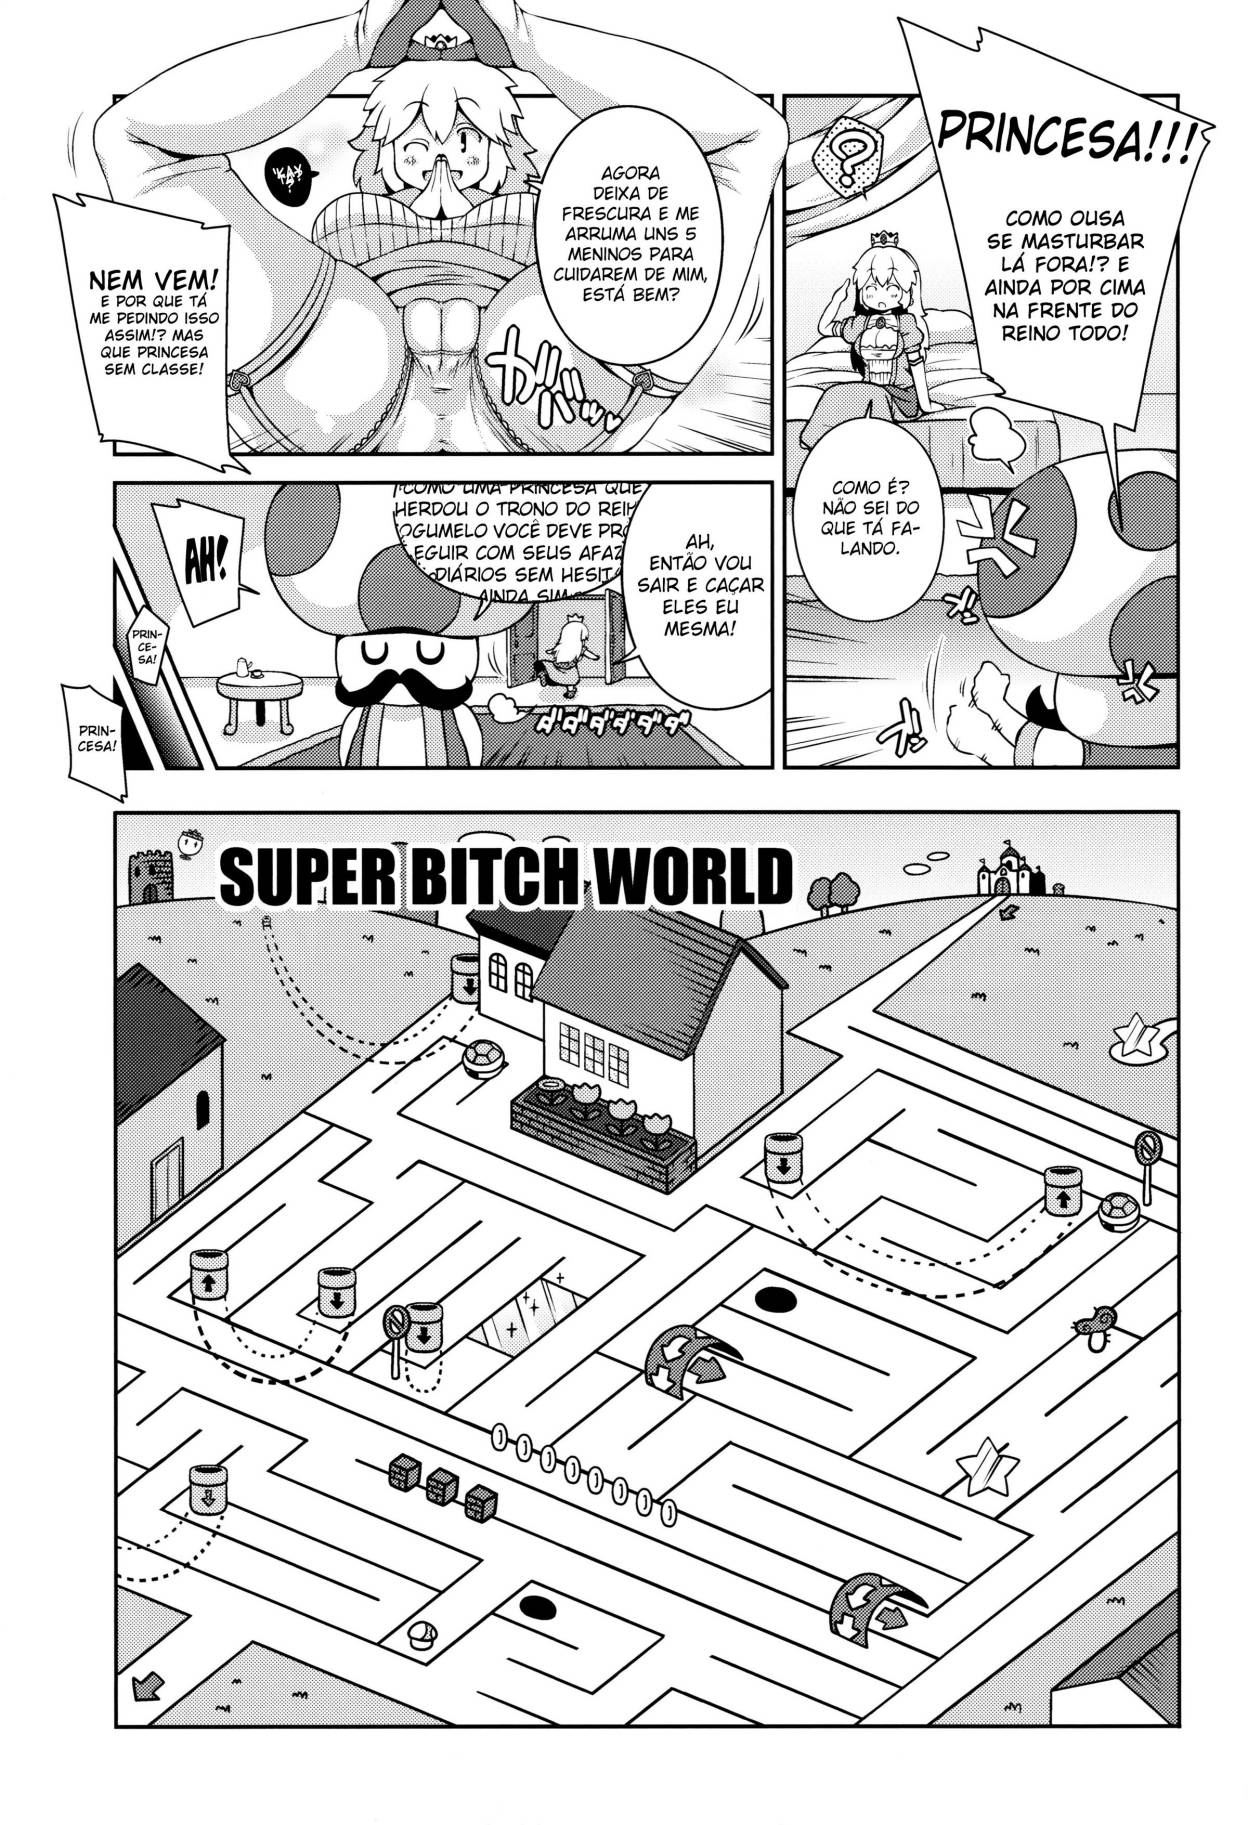 super-bitch-world-6.jpg